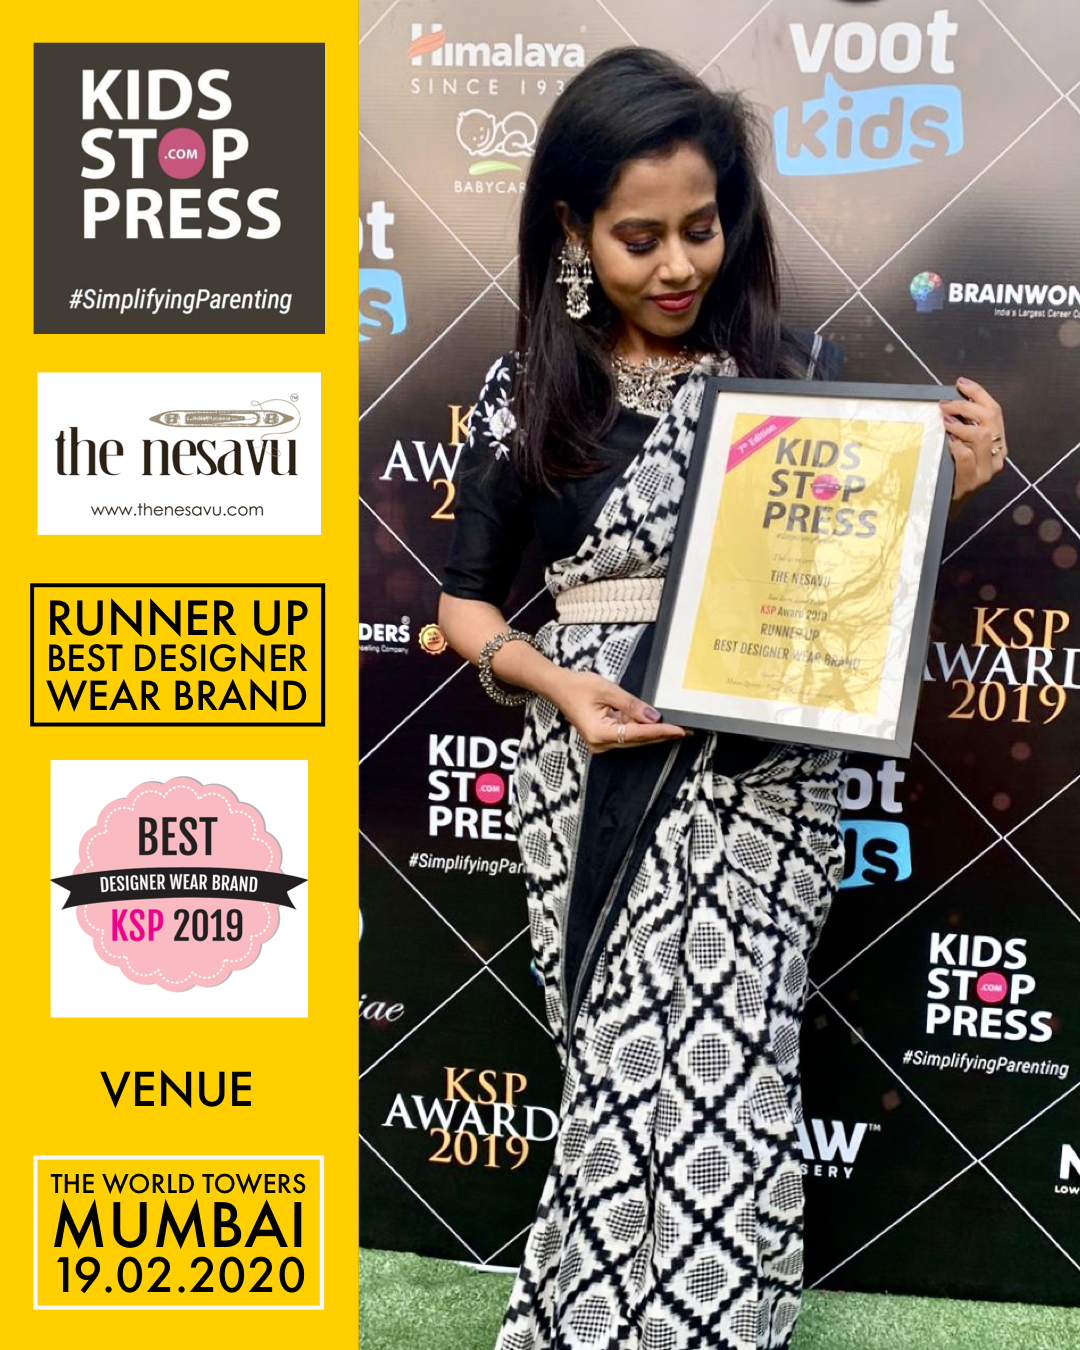 Coimbatore brand ‘The Nesavu’ won best designer kids wear brand 2019 in India by Kidsstoppress